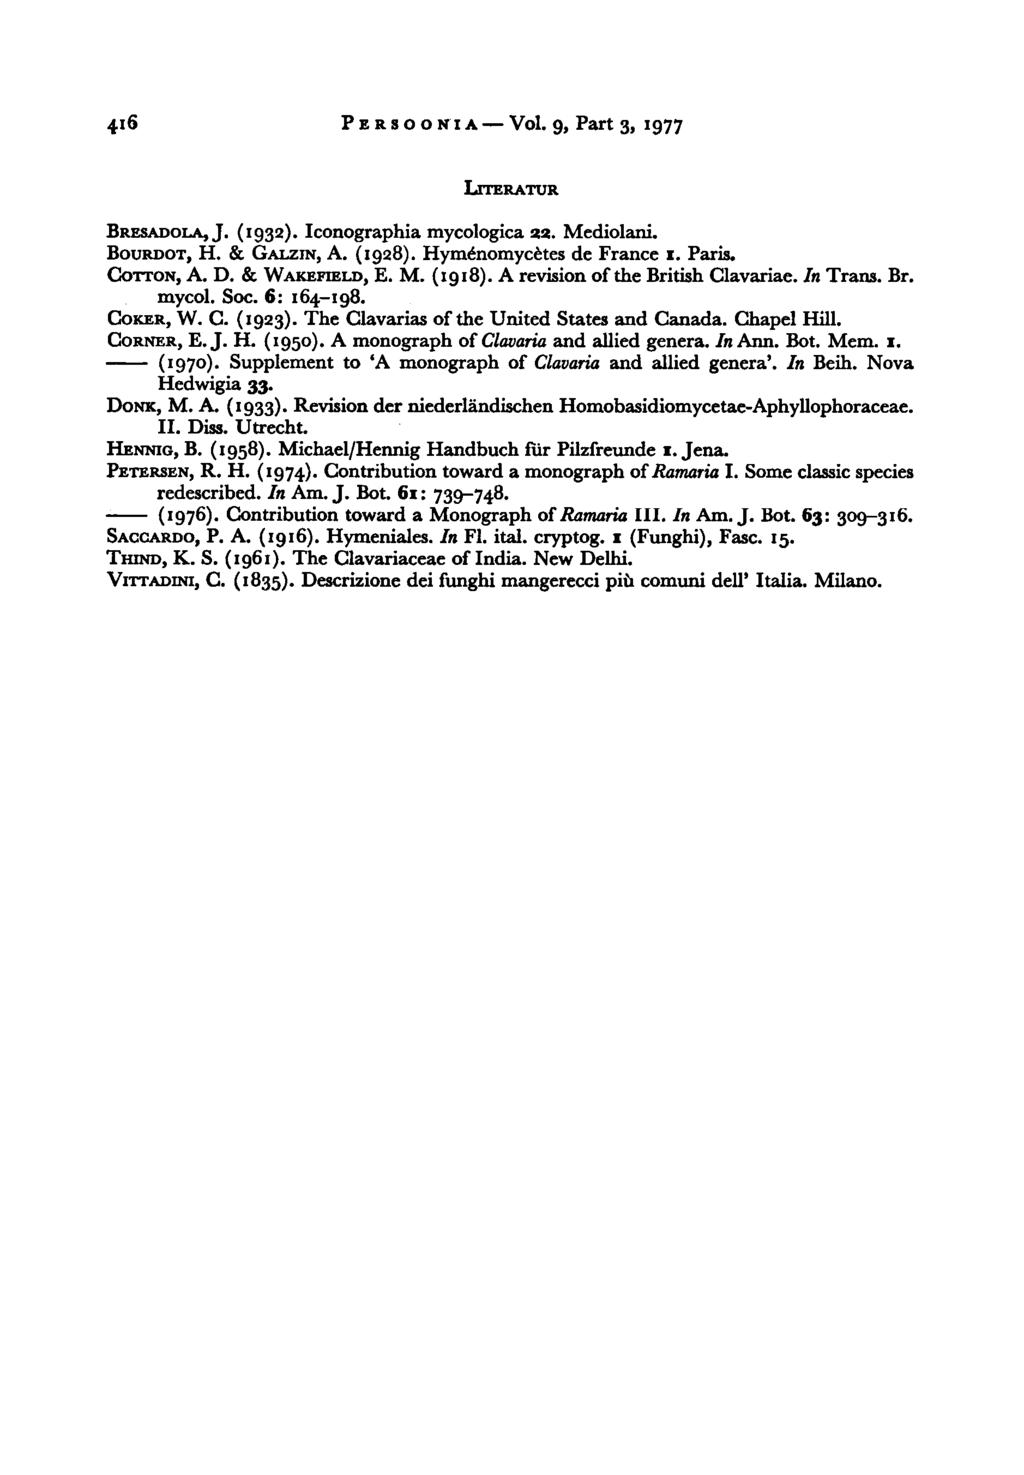 416 Persoonia Vol. 9, Part 3, 1977 LITERATUR BRESADOLA, J. (1932). Iconographia mycologica 22. Mediolani. BOURDOT, H. & GALZJN, A. (1928). Hymfeomycetes de France 1. Paris. COTTON, A. D.